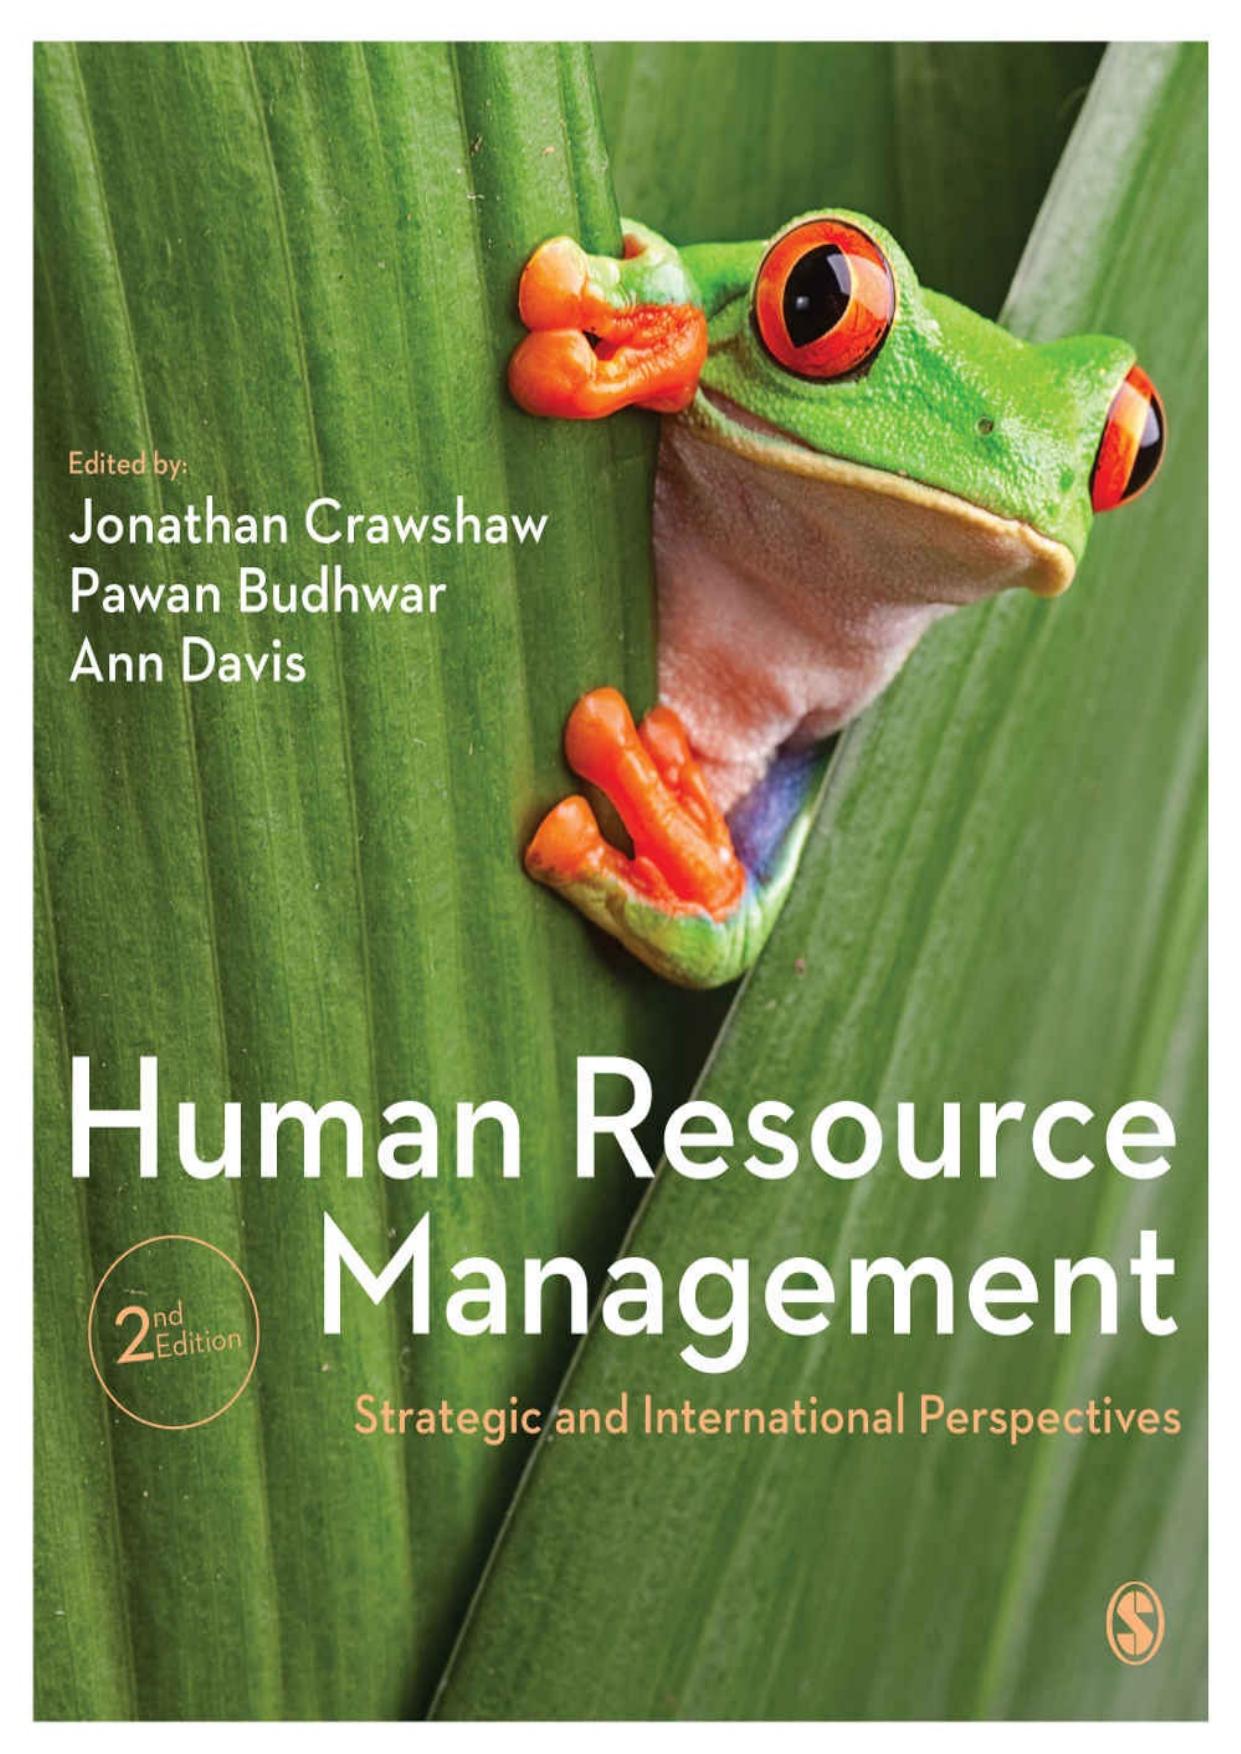 Human Resource Management Strategic and International Perspectinathan Crawshaw - Jonathan Crawshaw & Pawan Budhwar & Ann Davis.jpg